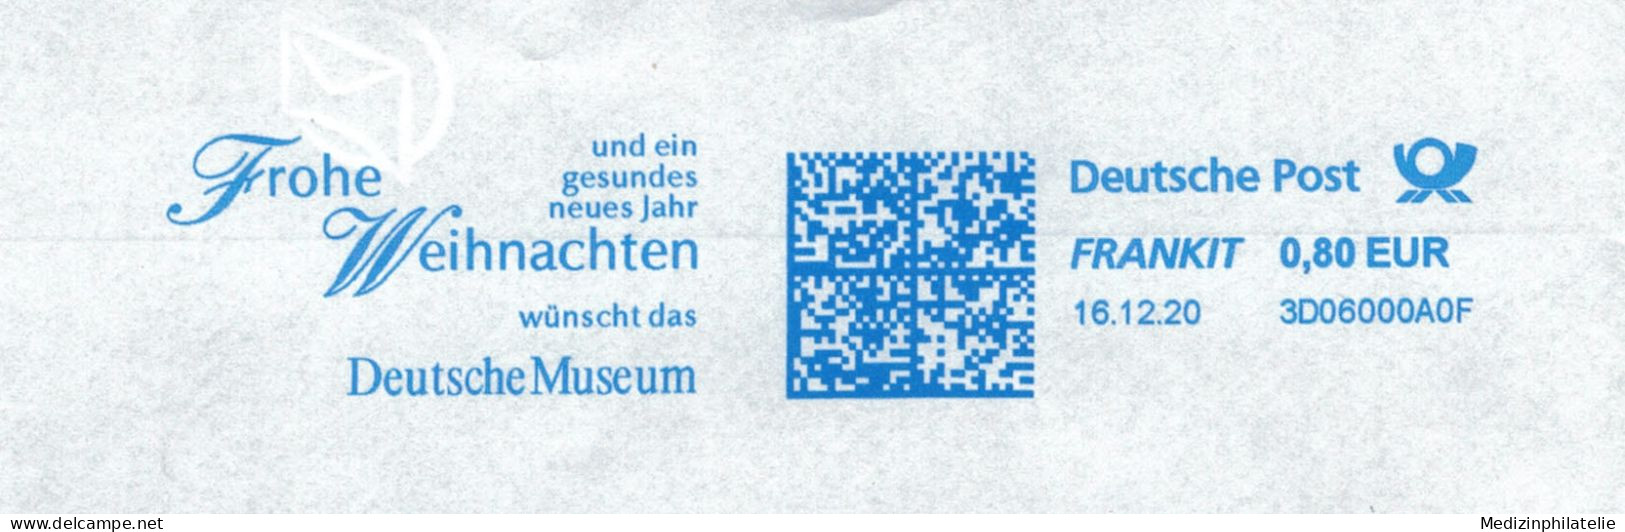 Frohe Weihnacht Wünscht Deutsches Museum  2020 - Musei